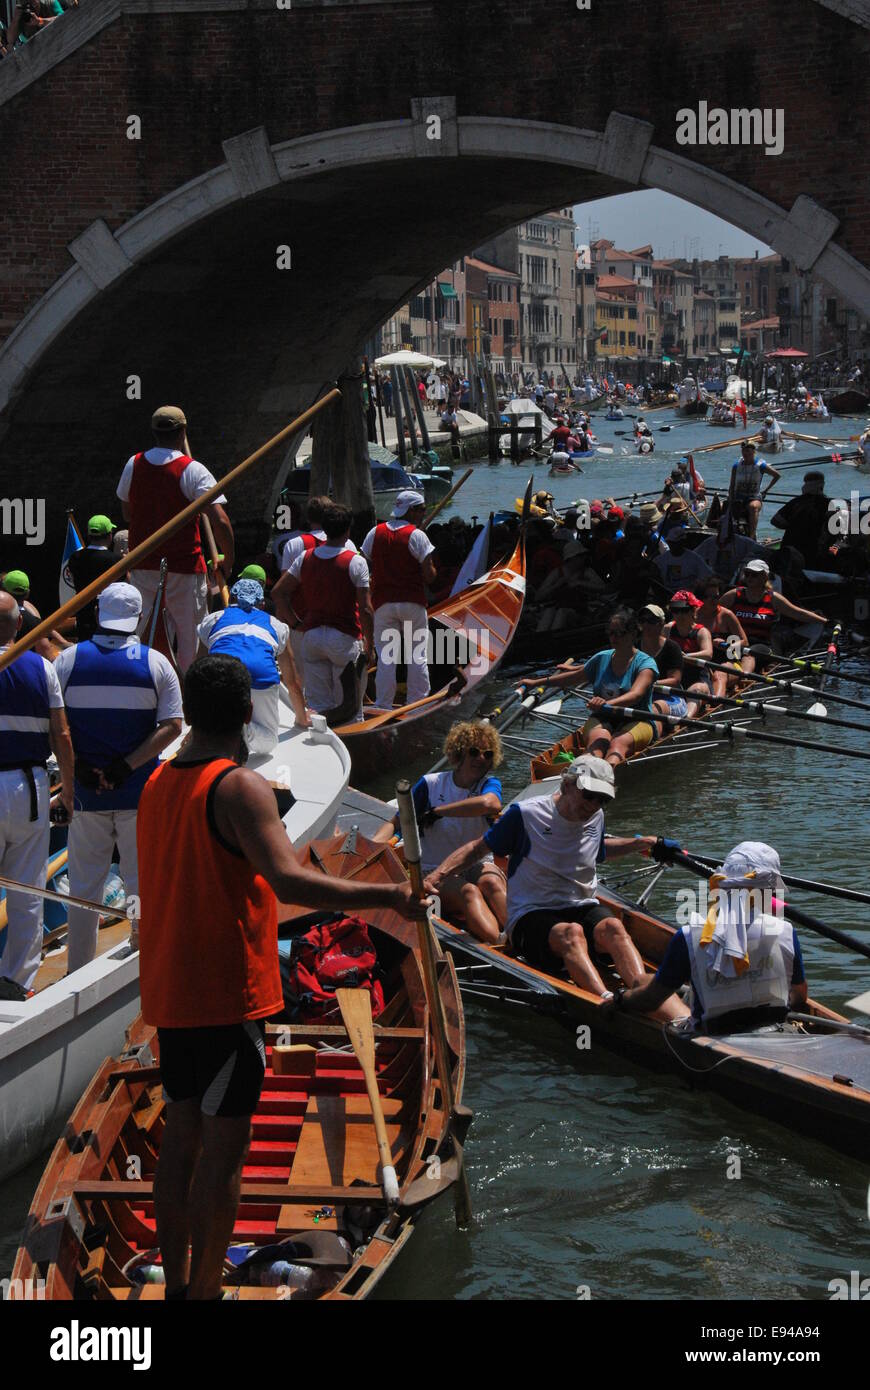 Italien. Venedig. Vogalonga 2014. Große und Kanus. Ruder. Warteschlange unter Brücke bekommen. Chaos. Blick durch die Brücke. Ruderer. Stockfoto